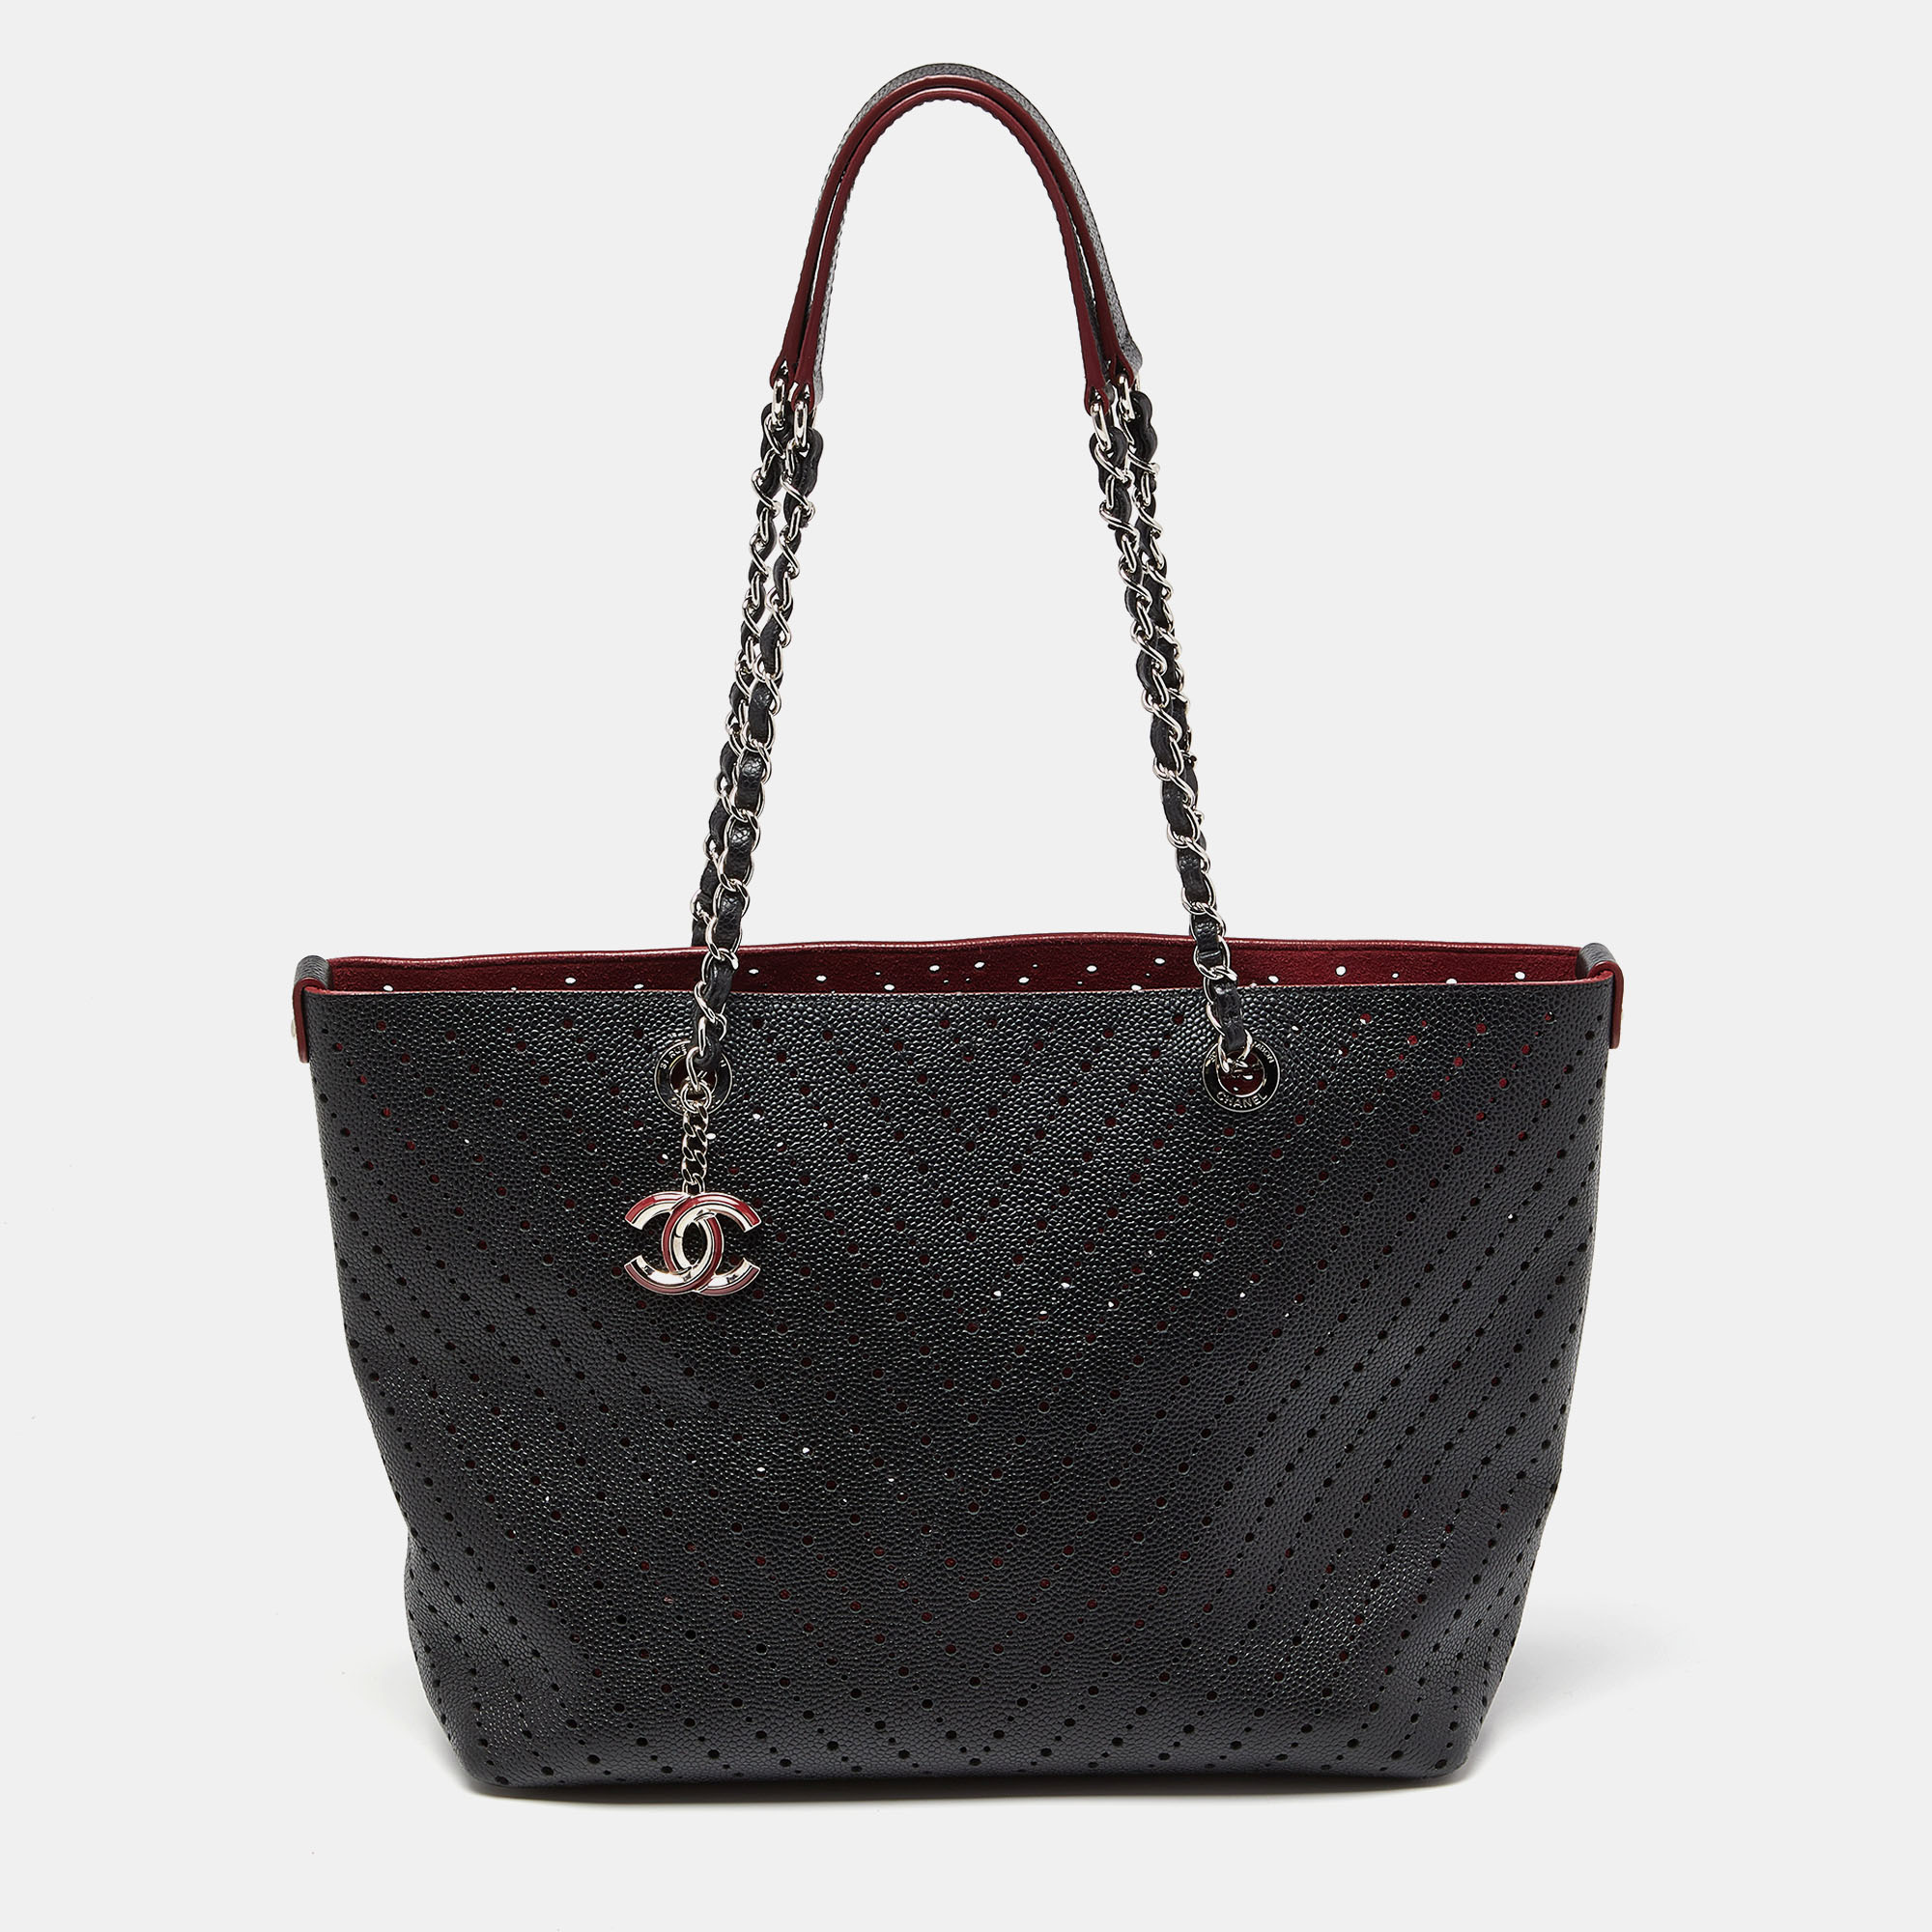 

Chanel Black Perforated Caviar Leather Medium Shopper Tote